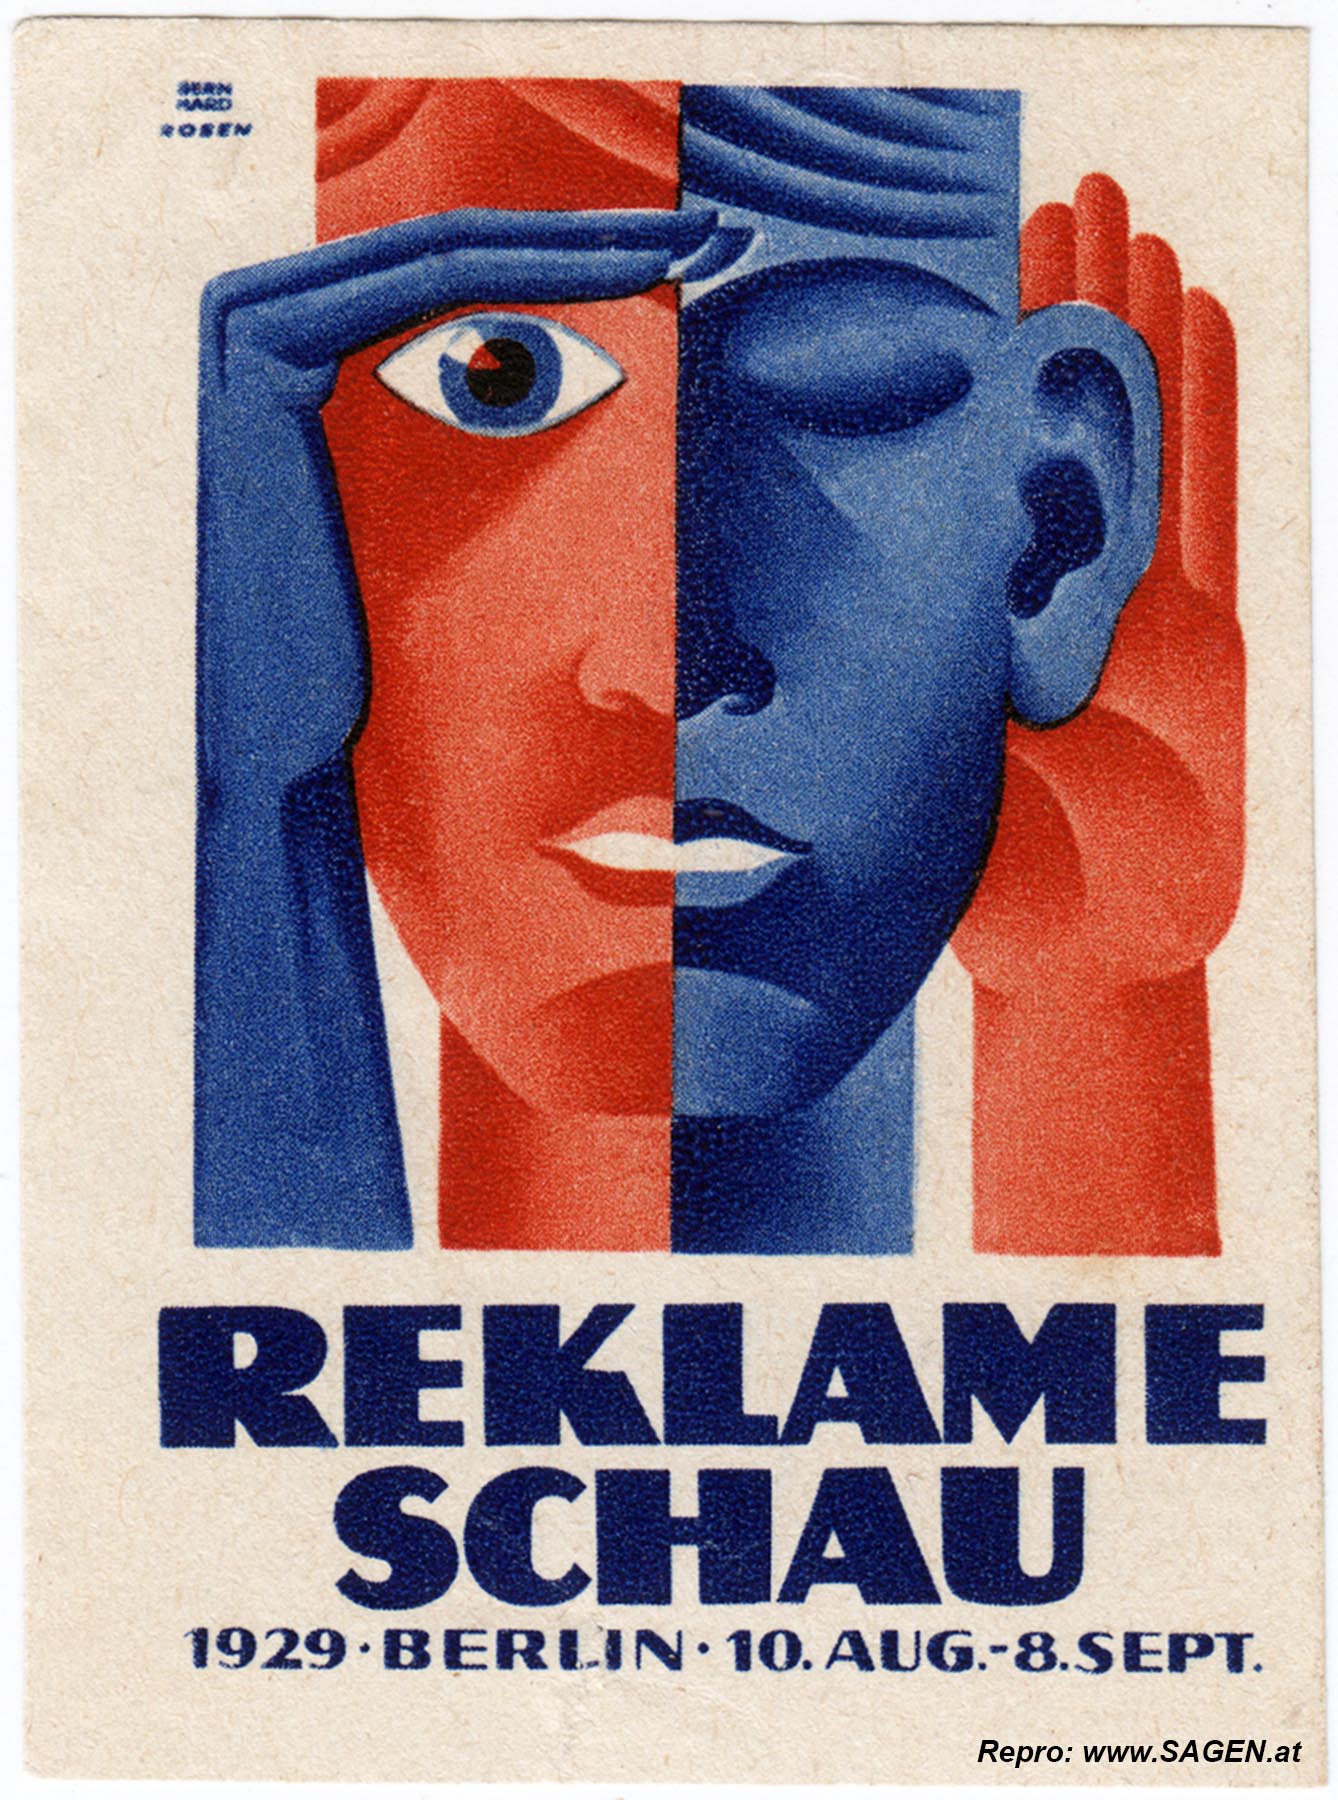 Reklamemarke Reklameschau 1929